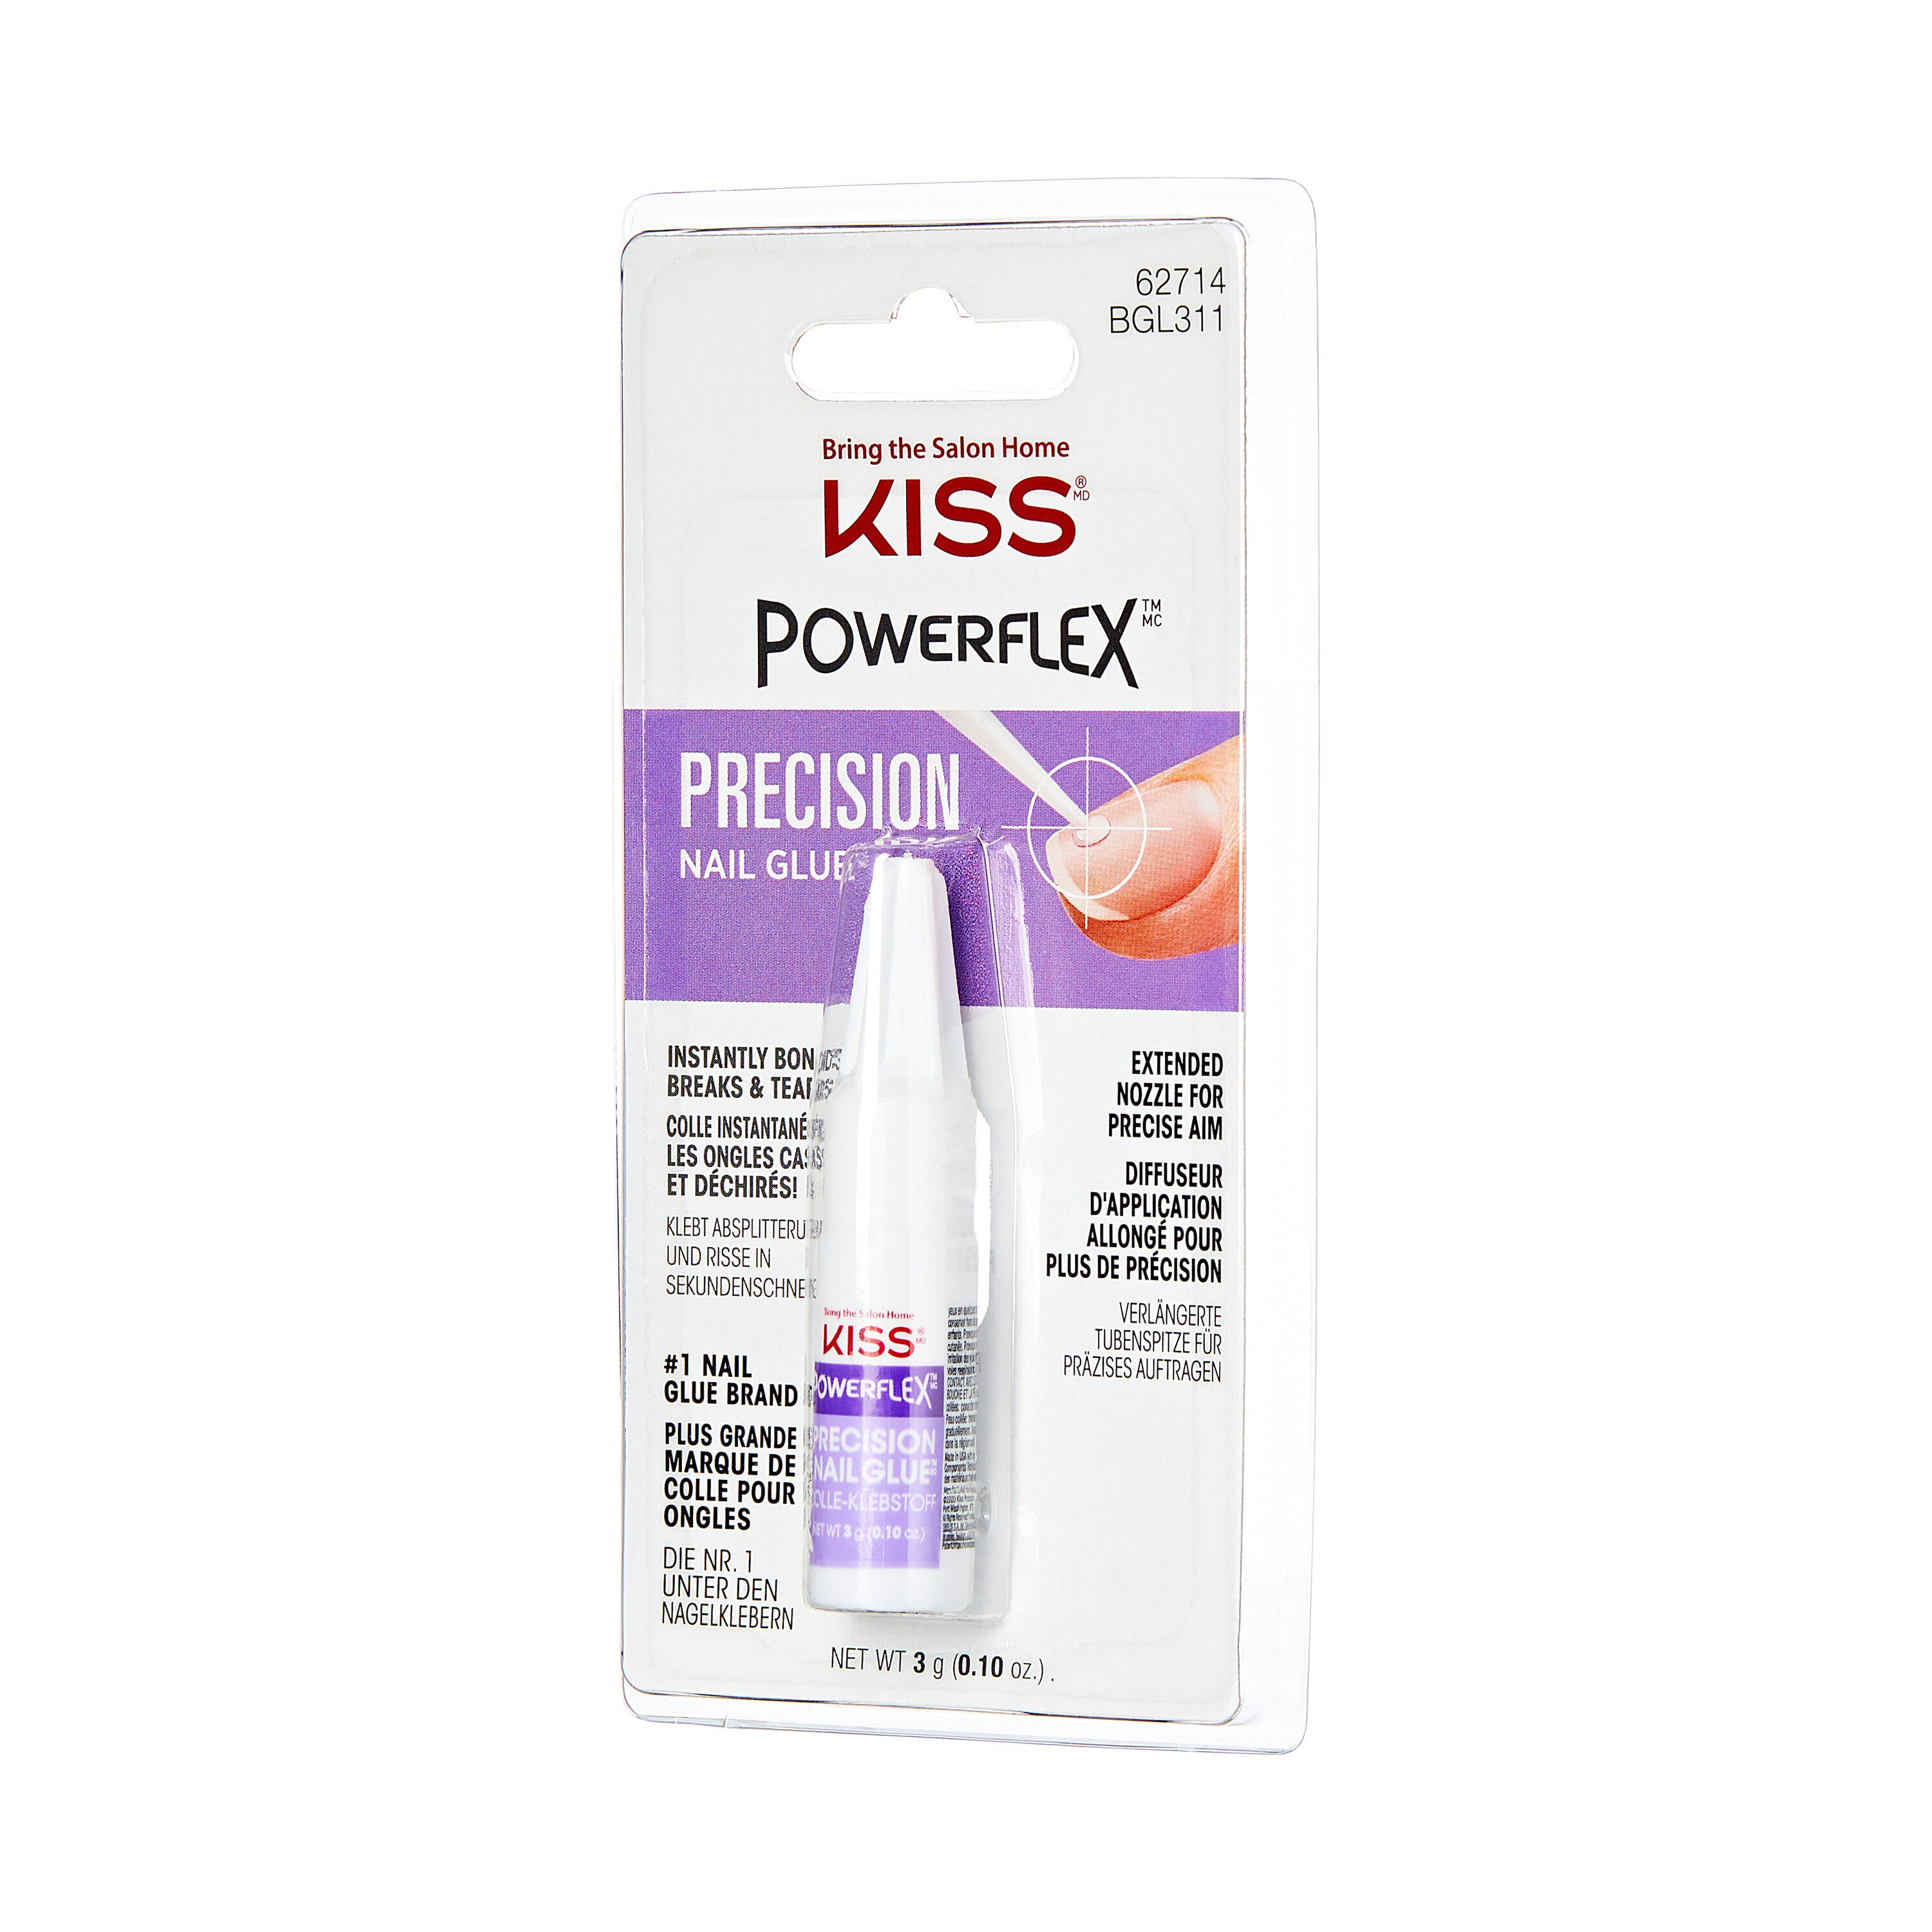 KISS PowerFlex Precision Nail Glue